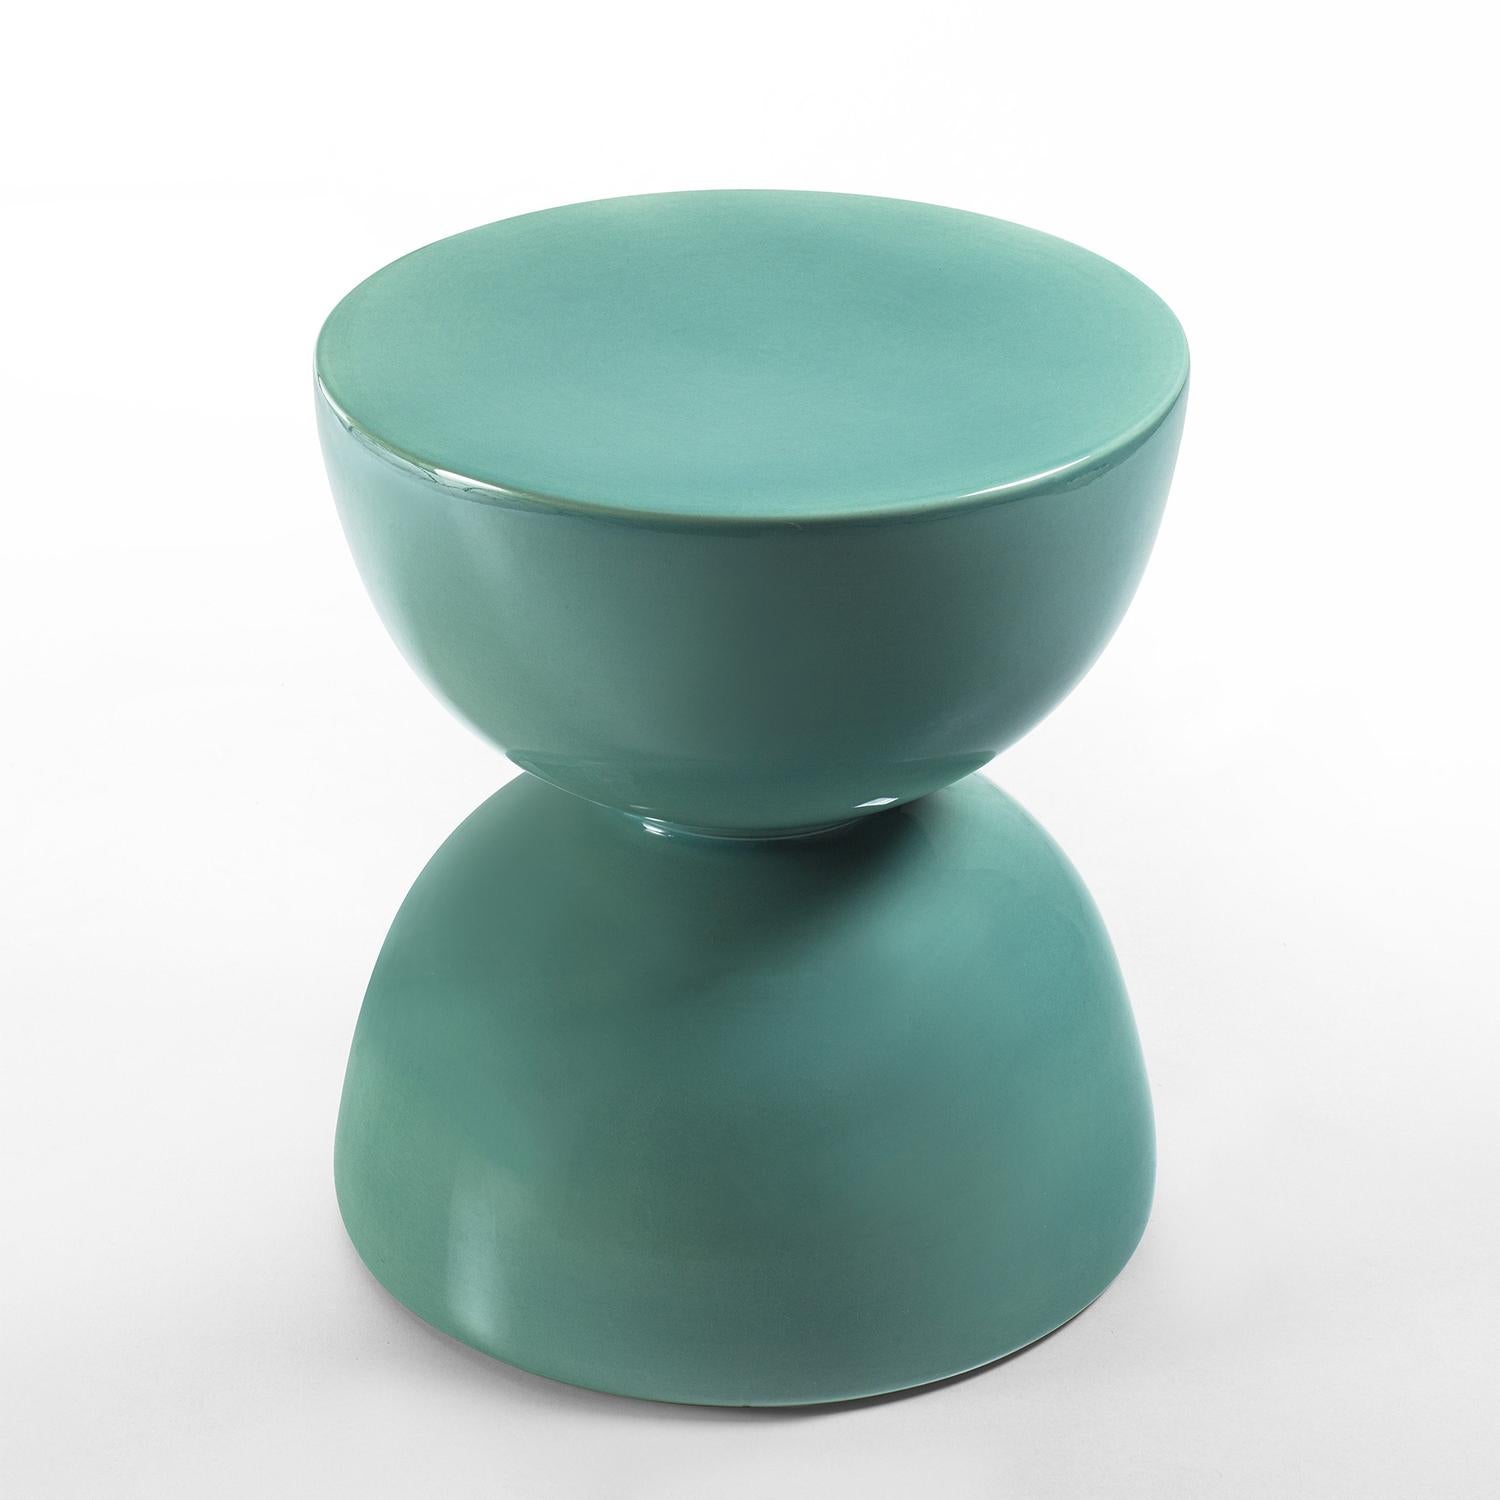 Stool Spheres Green all in enameled 
ceramic in blue finish.